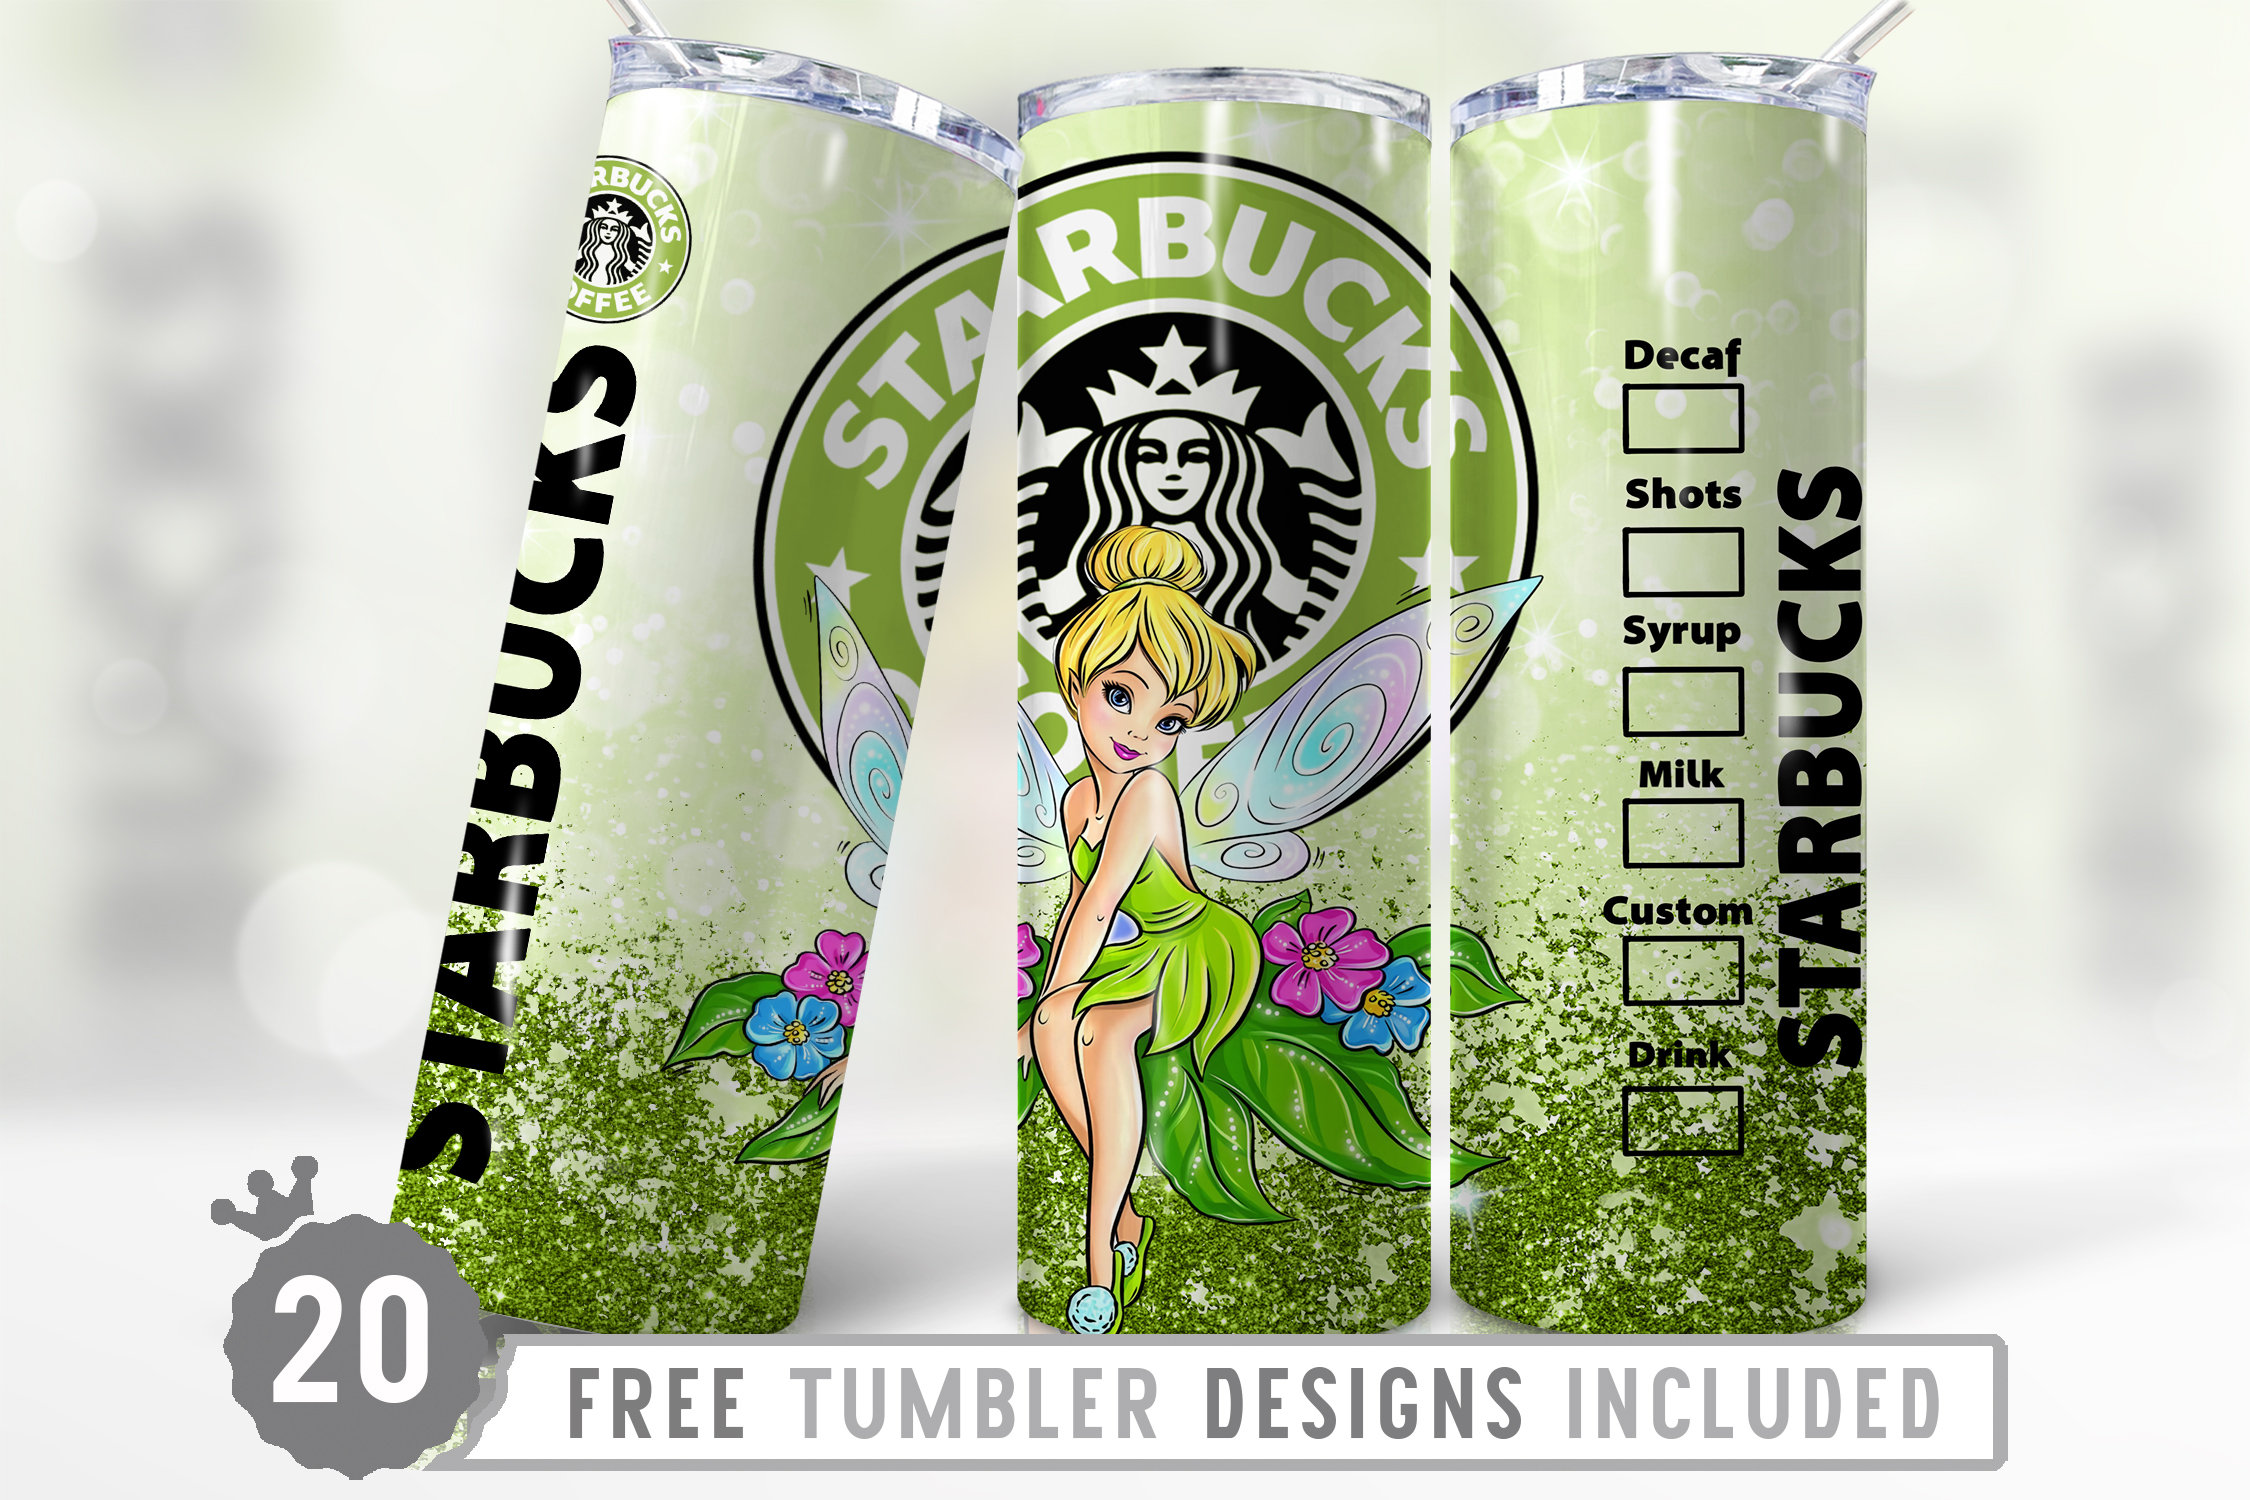 Starbucks Kitchen | Starbucks Mermaid Scale Iridescent Tumbler - Grande 16 oz | Color: Blue/Green | Size: Os | Belen5445's Closet